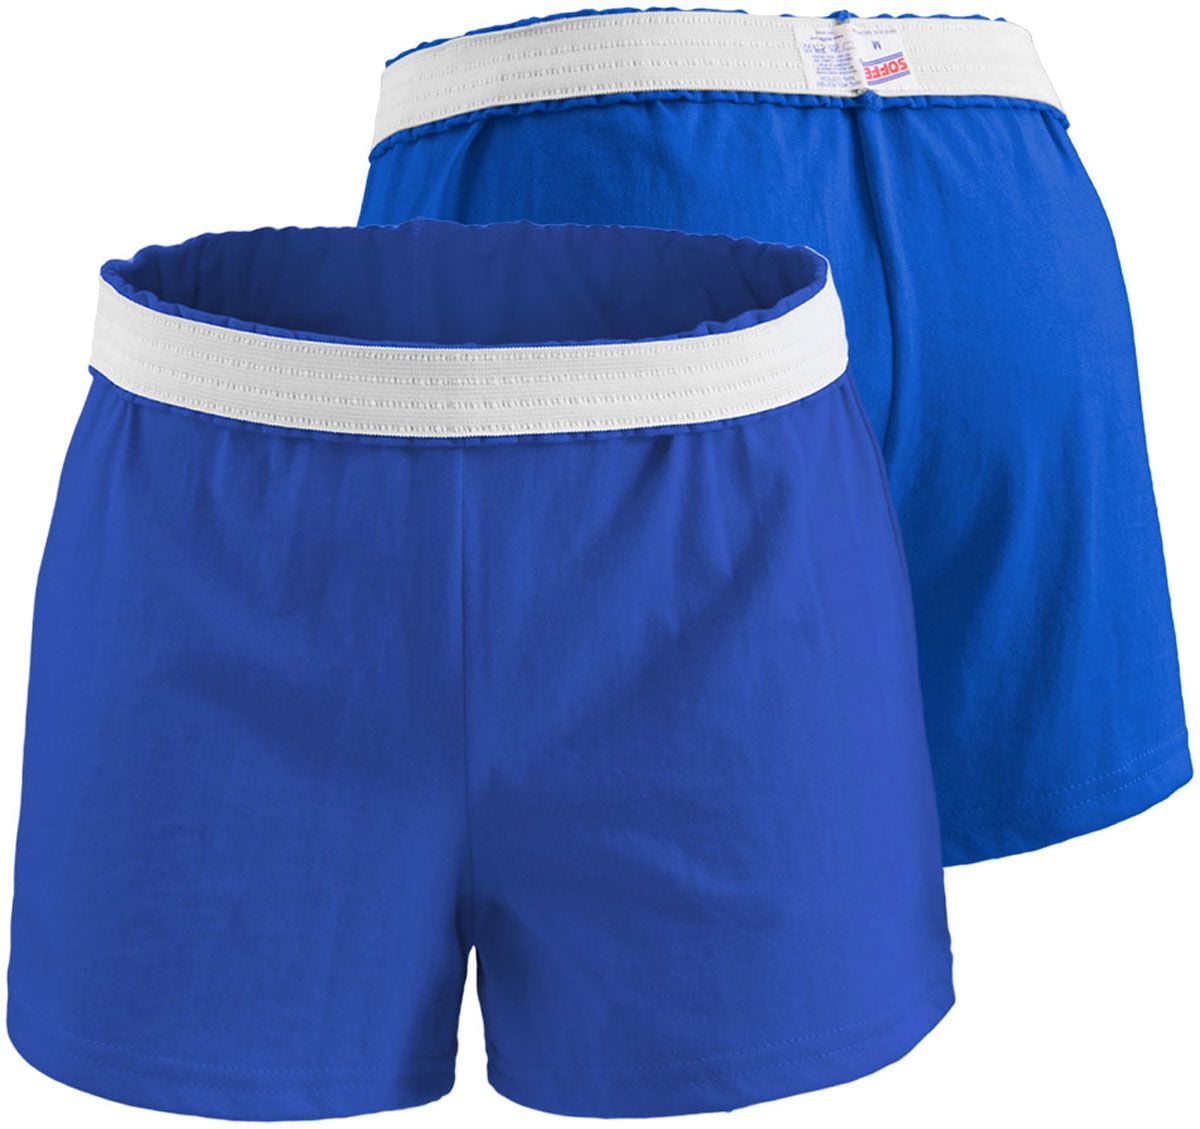 Soffe Juniors' Knit Athletic Cheer Shorts Royal Blue X-Small